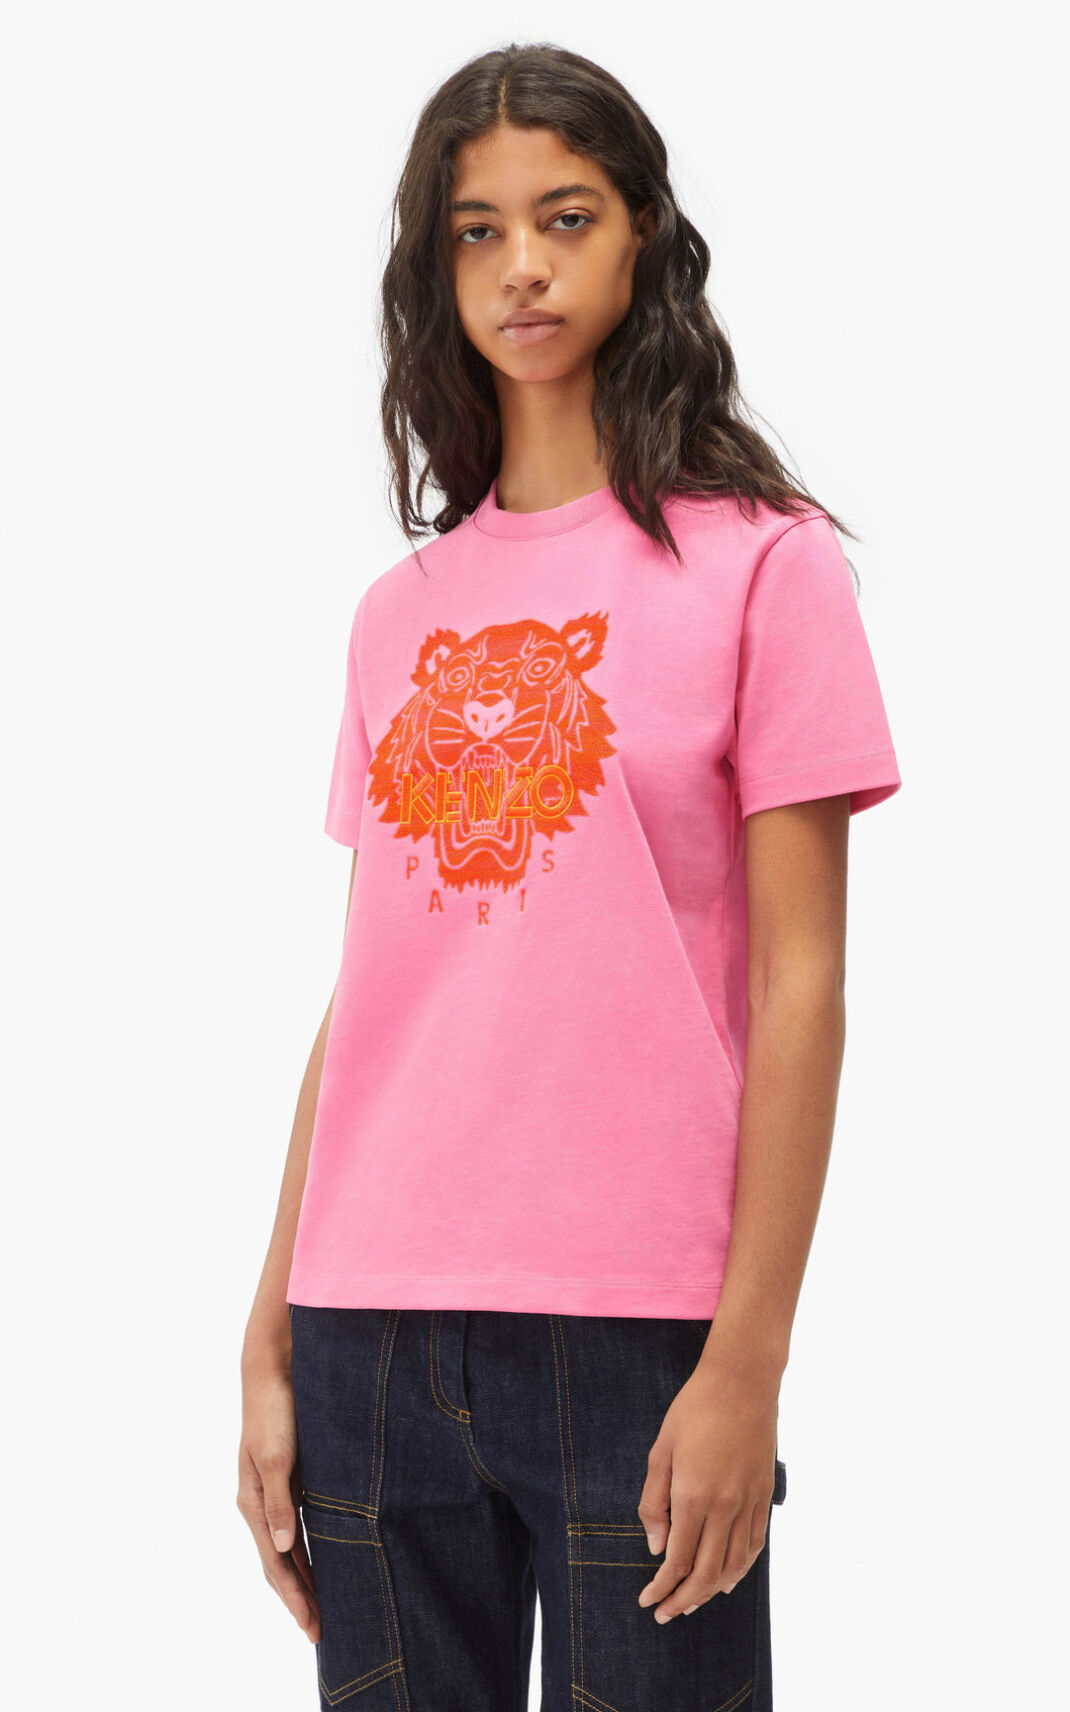 Camisetas Kenzo Loose Tiger Mujer Rosas - SKU.2384098